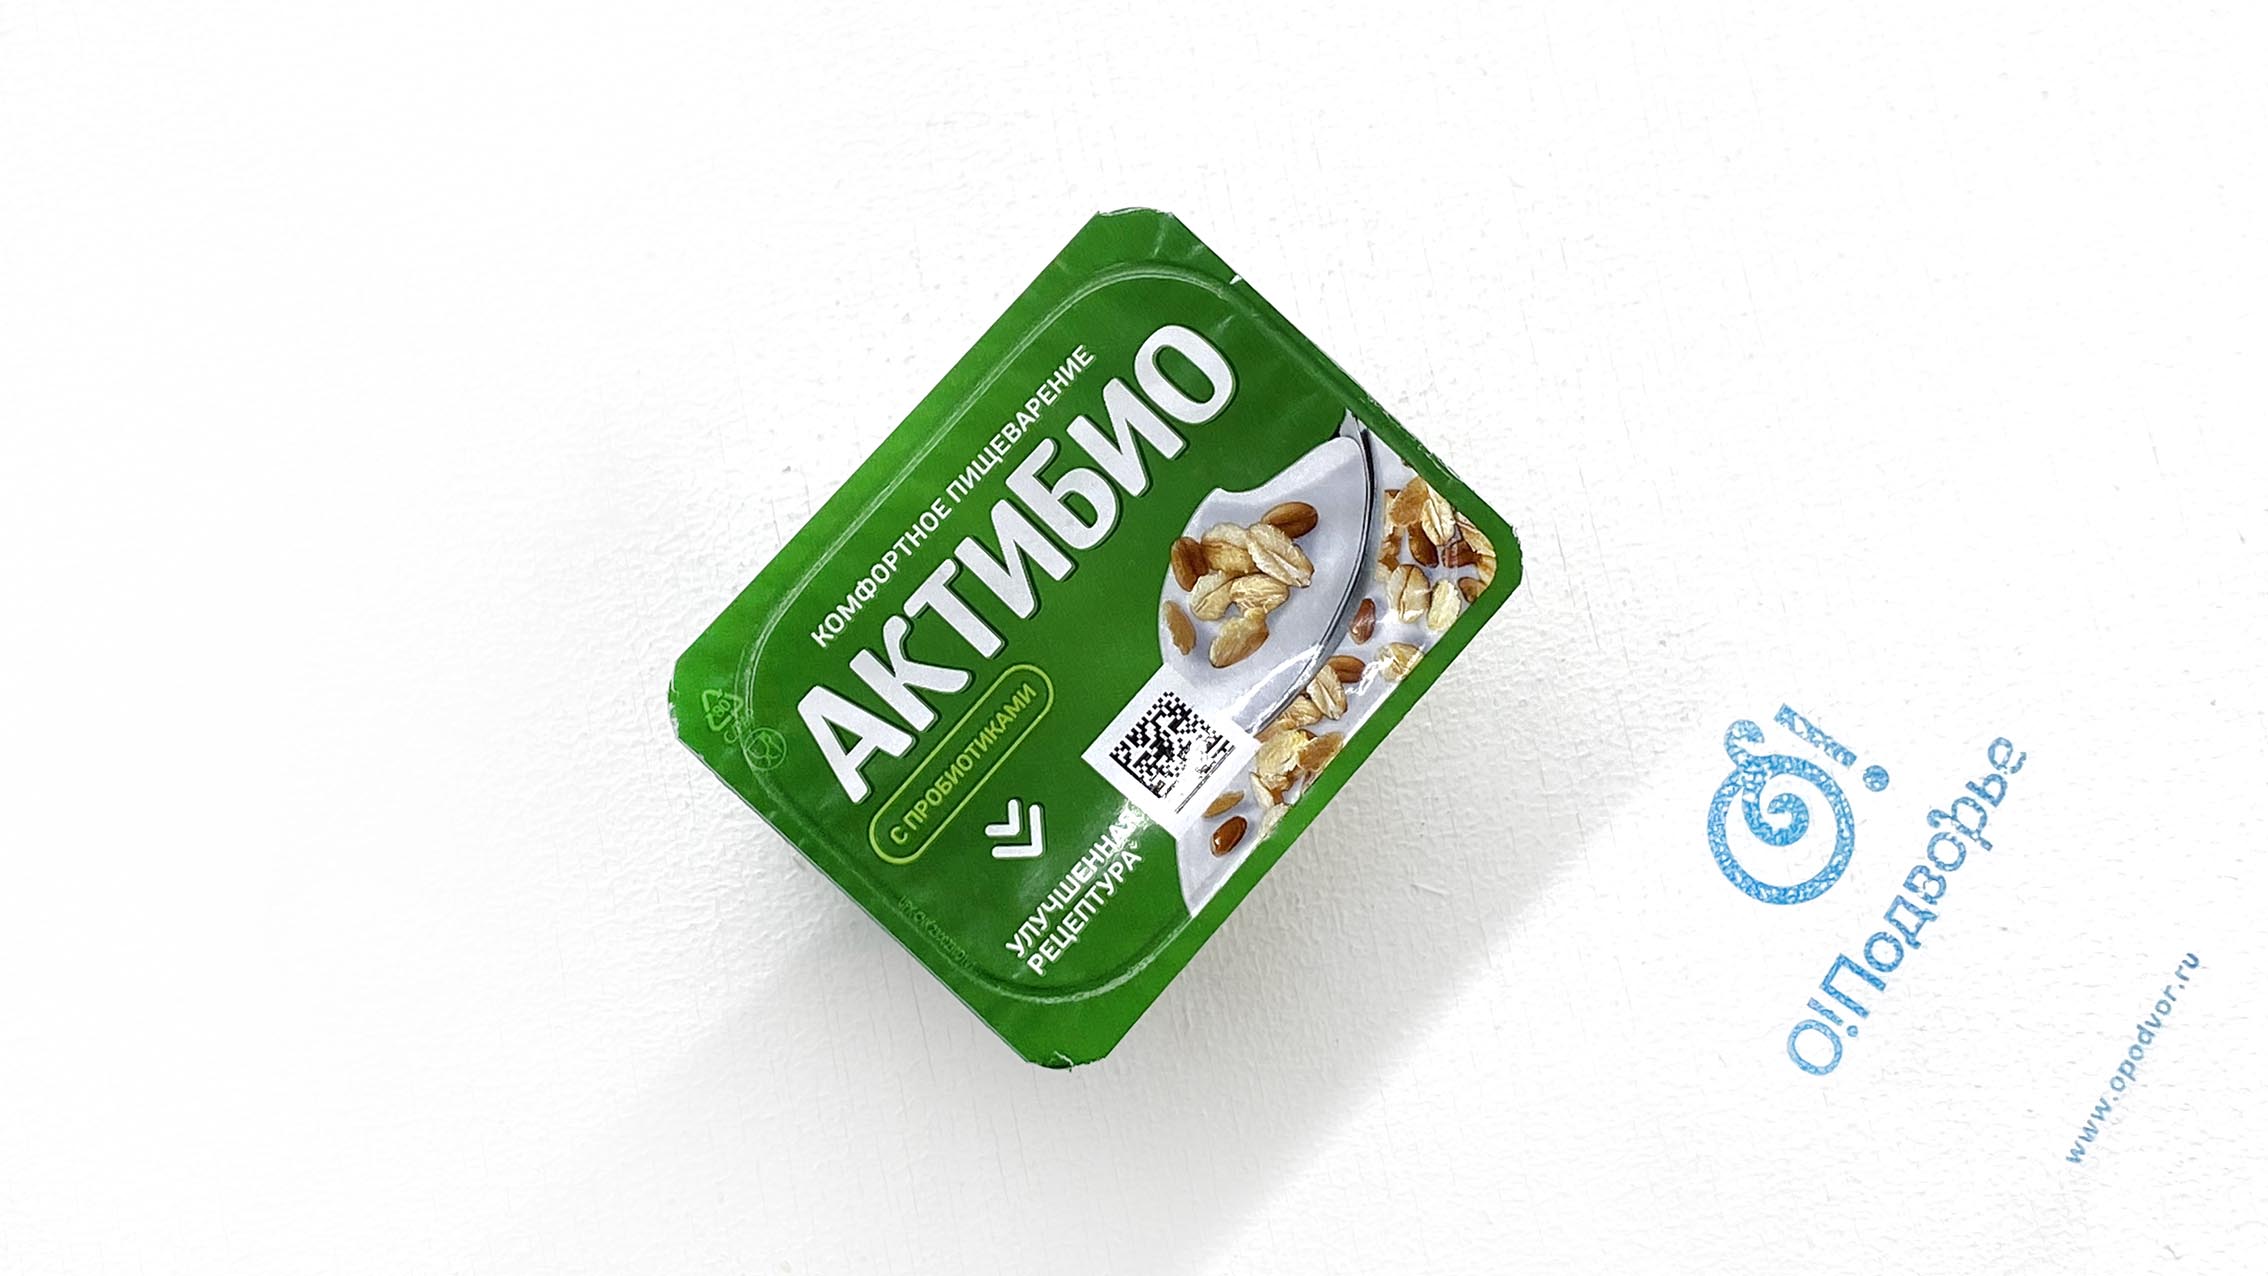 "Актибио", йогурт, обогащенный бифидобактериями B. LACTIS, с отрубями и злаками, 2,9%, АО "Эйч энд Эн", 130 грамм, (Зл) 